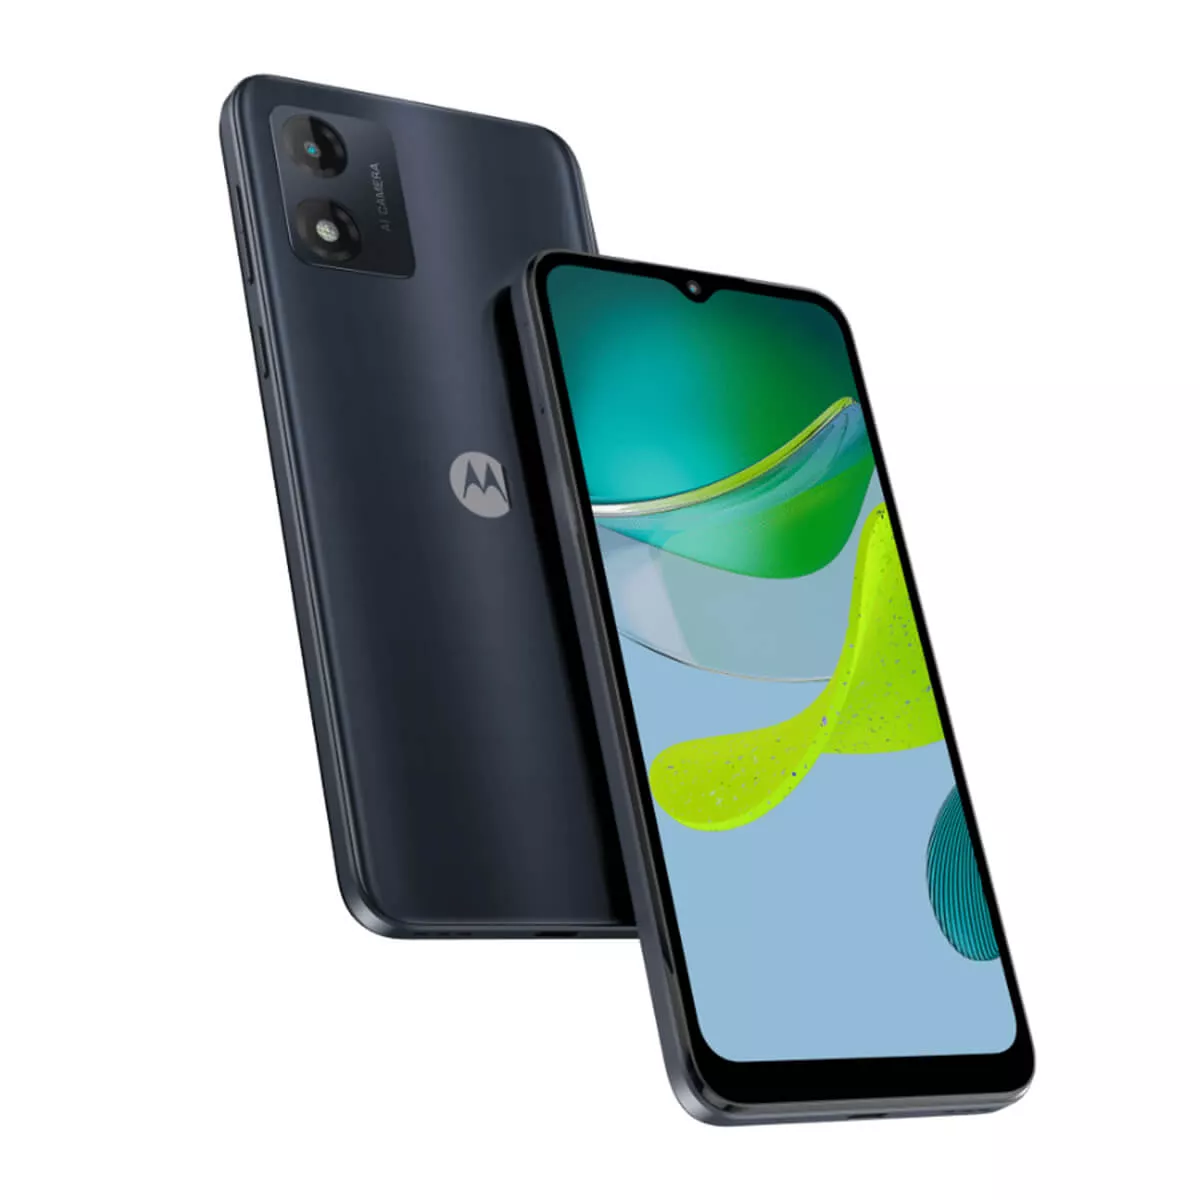  Motorola Moto E13 Dual SIM 64GB ROM + 2GB RAM Factory Unlocked  4G Smartphone (Cosmic Black) - International Version : Cell Phones &  Accessories